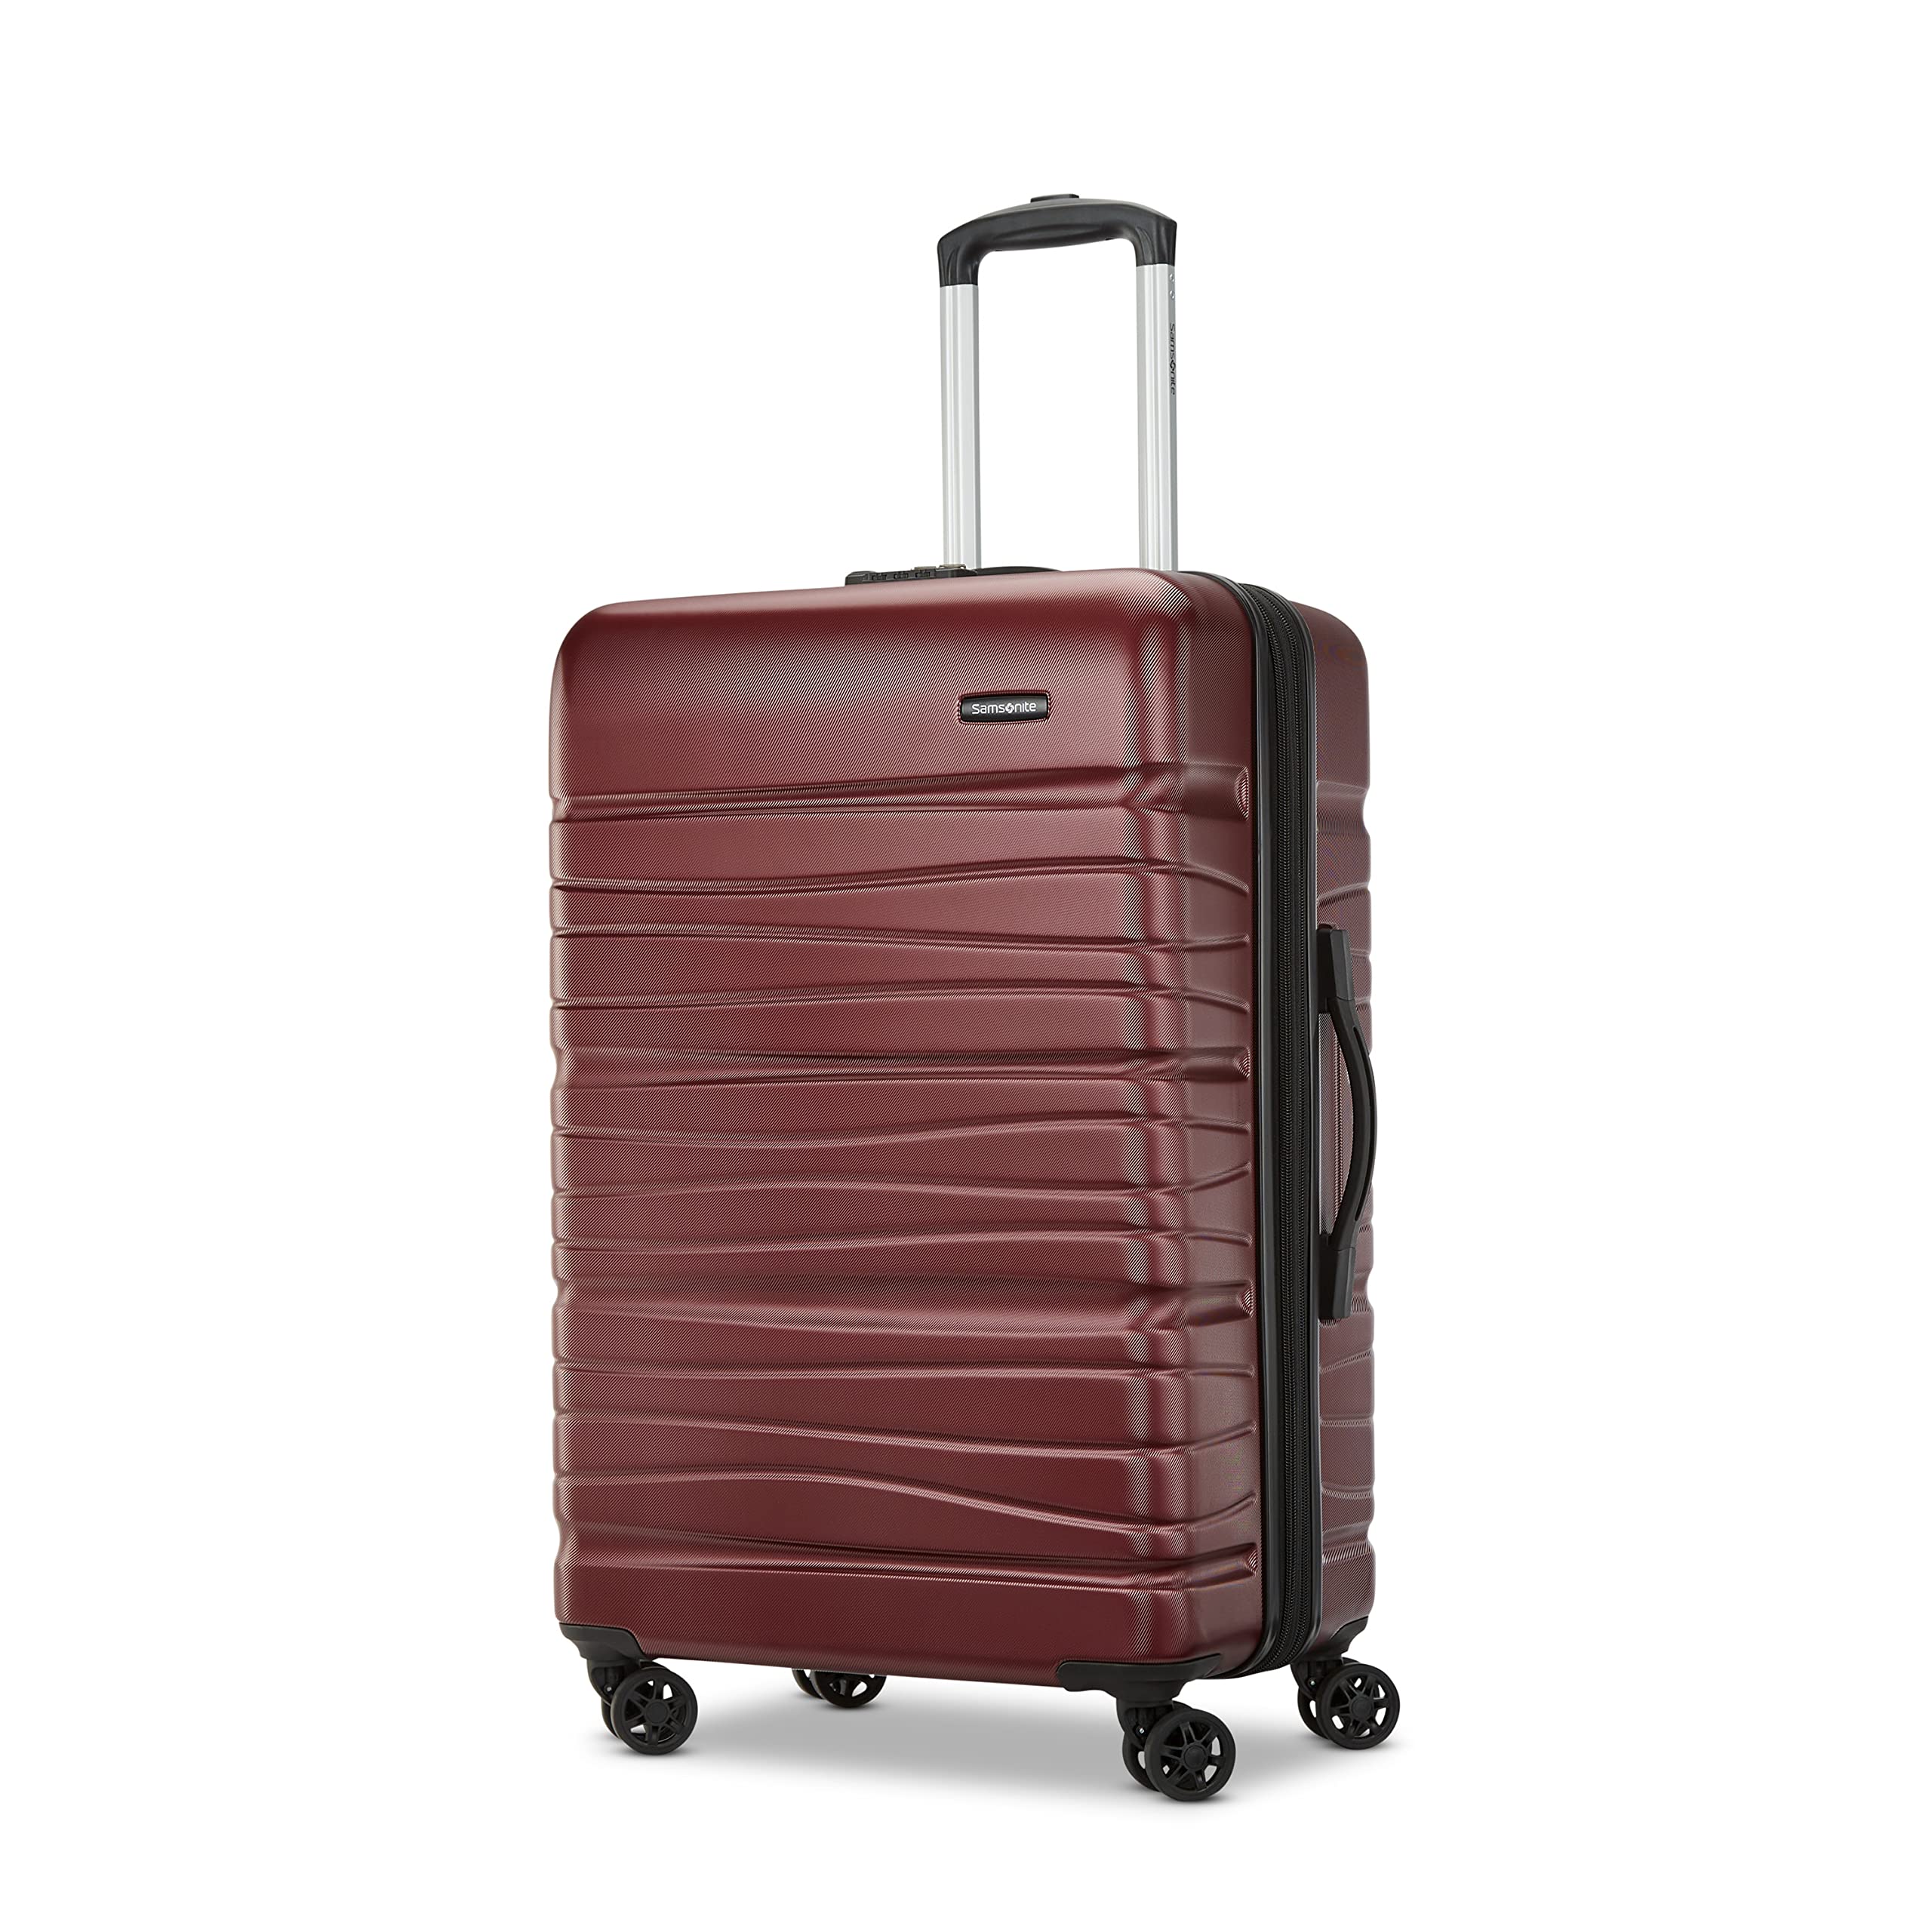 24" Samsonite Evolve SE Hardside Expandable Luggage w/ Spinner Wheels (Matte Burgundy) $80 + Free Shipping